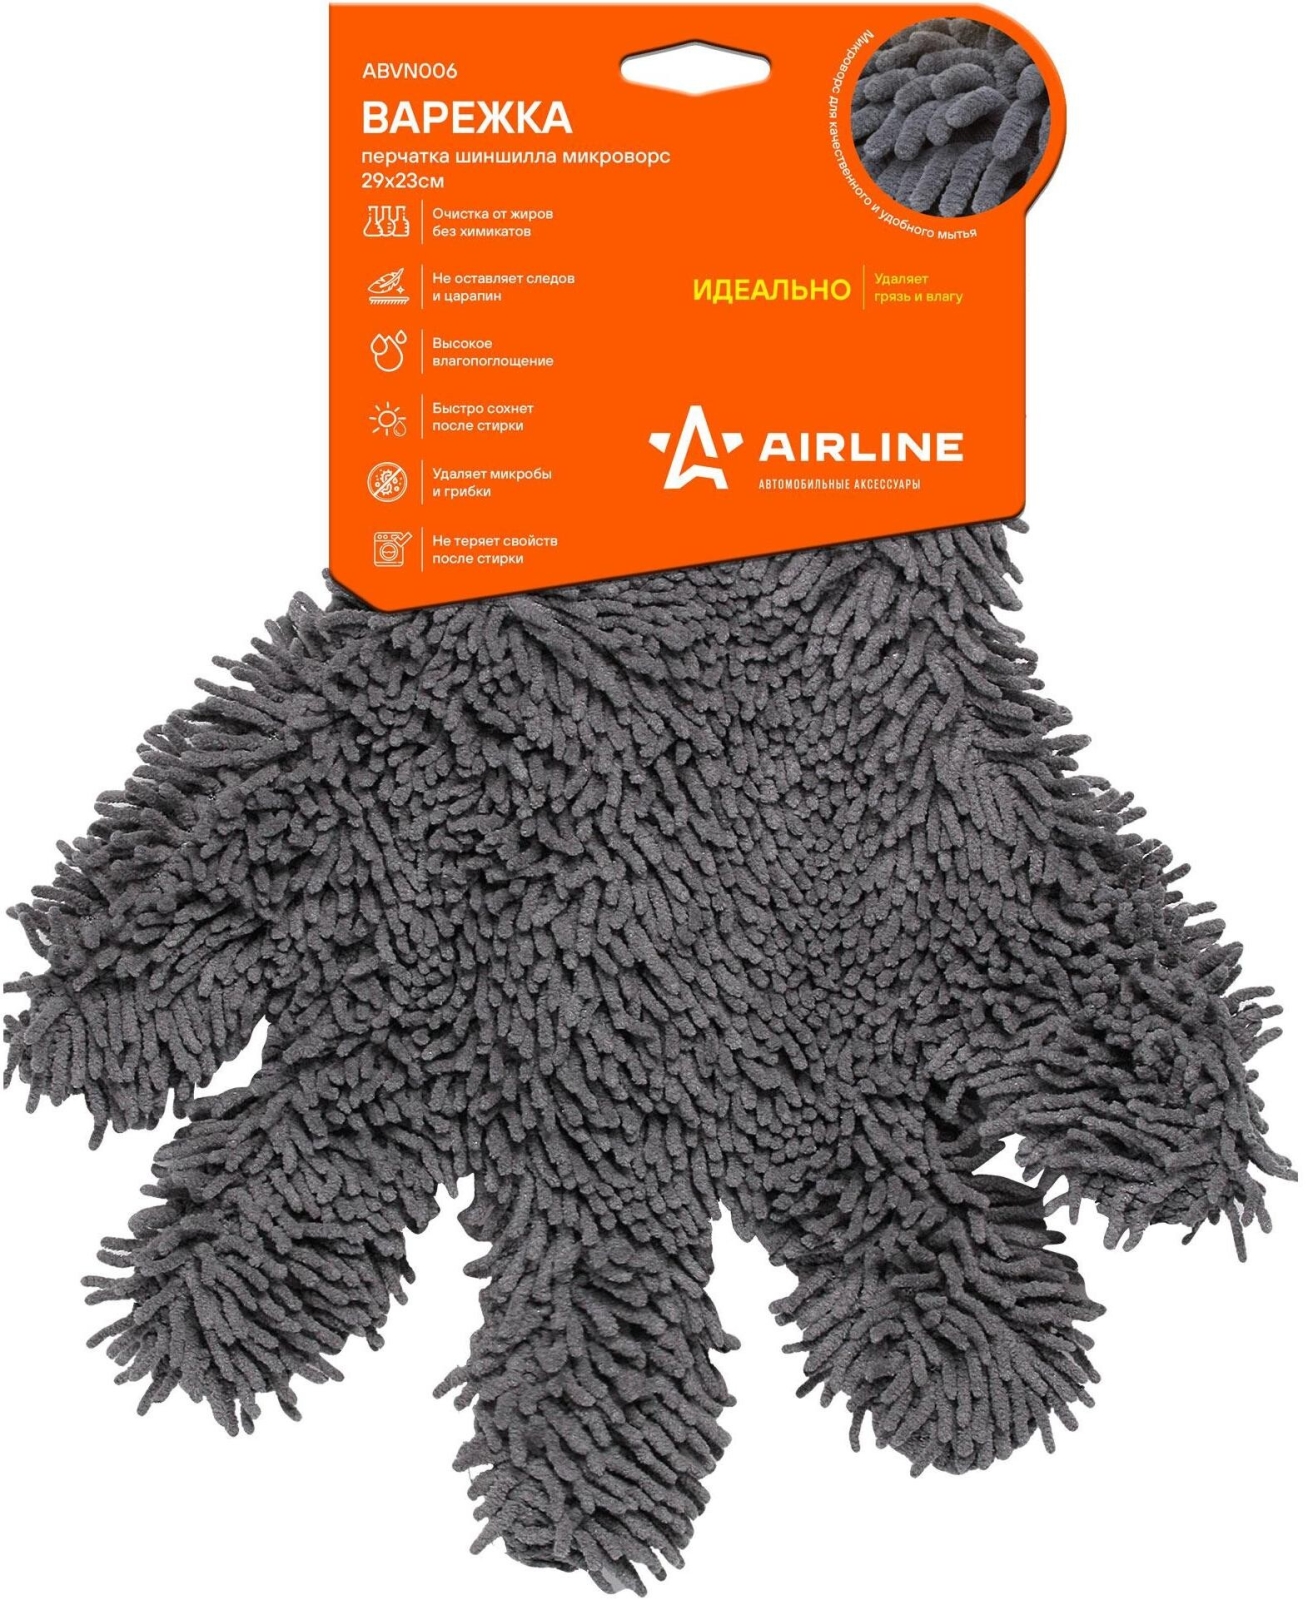 Варежка-перчатка для автомобиля AIRLINE Шиншилла микроворс (ABVN006)